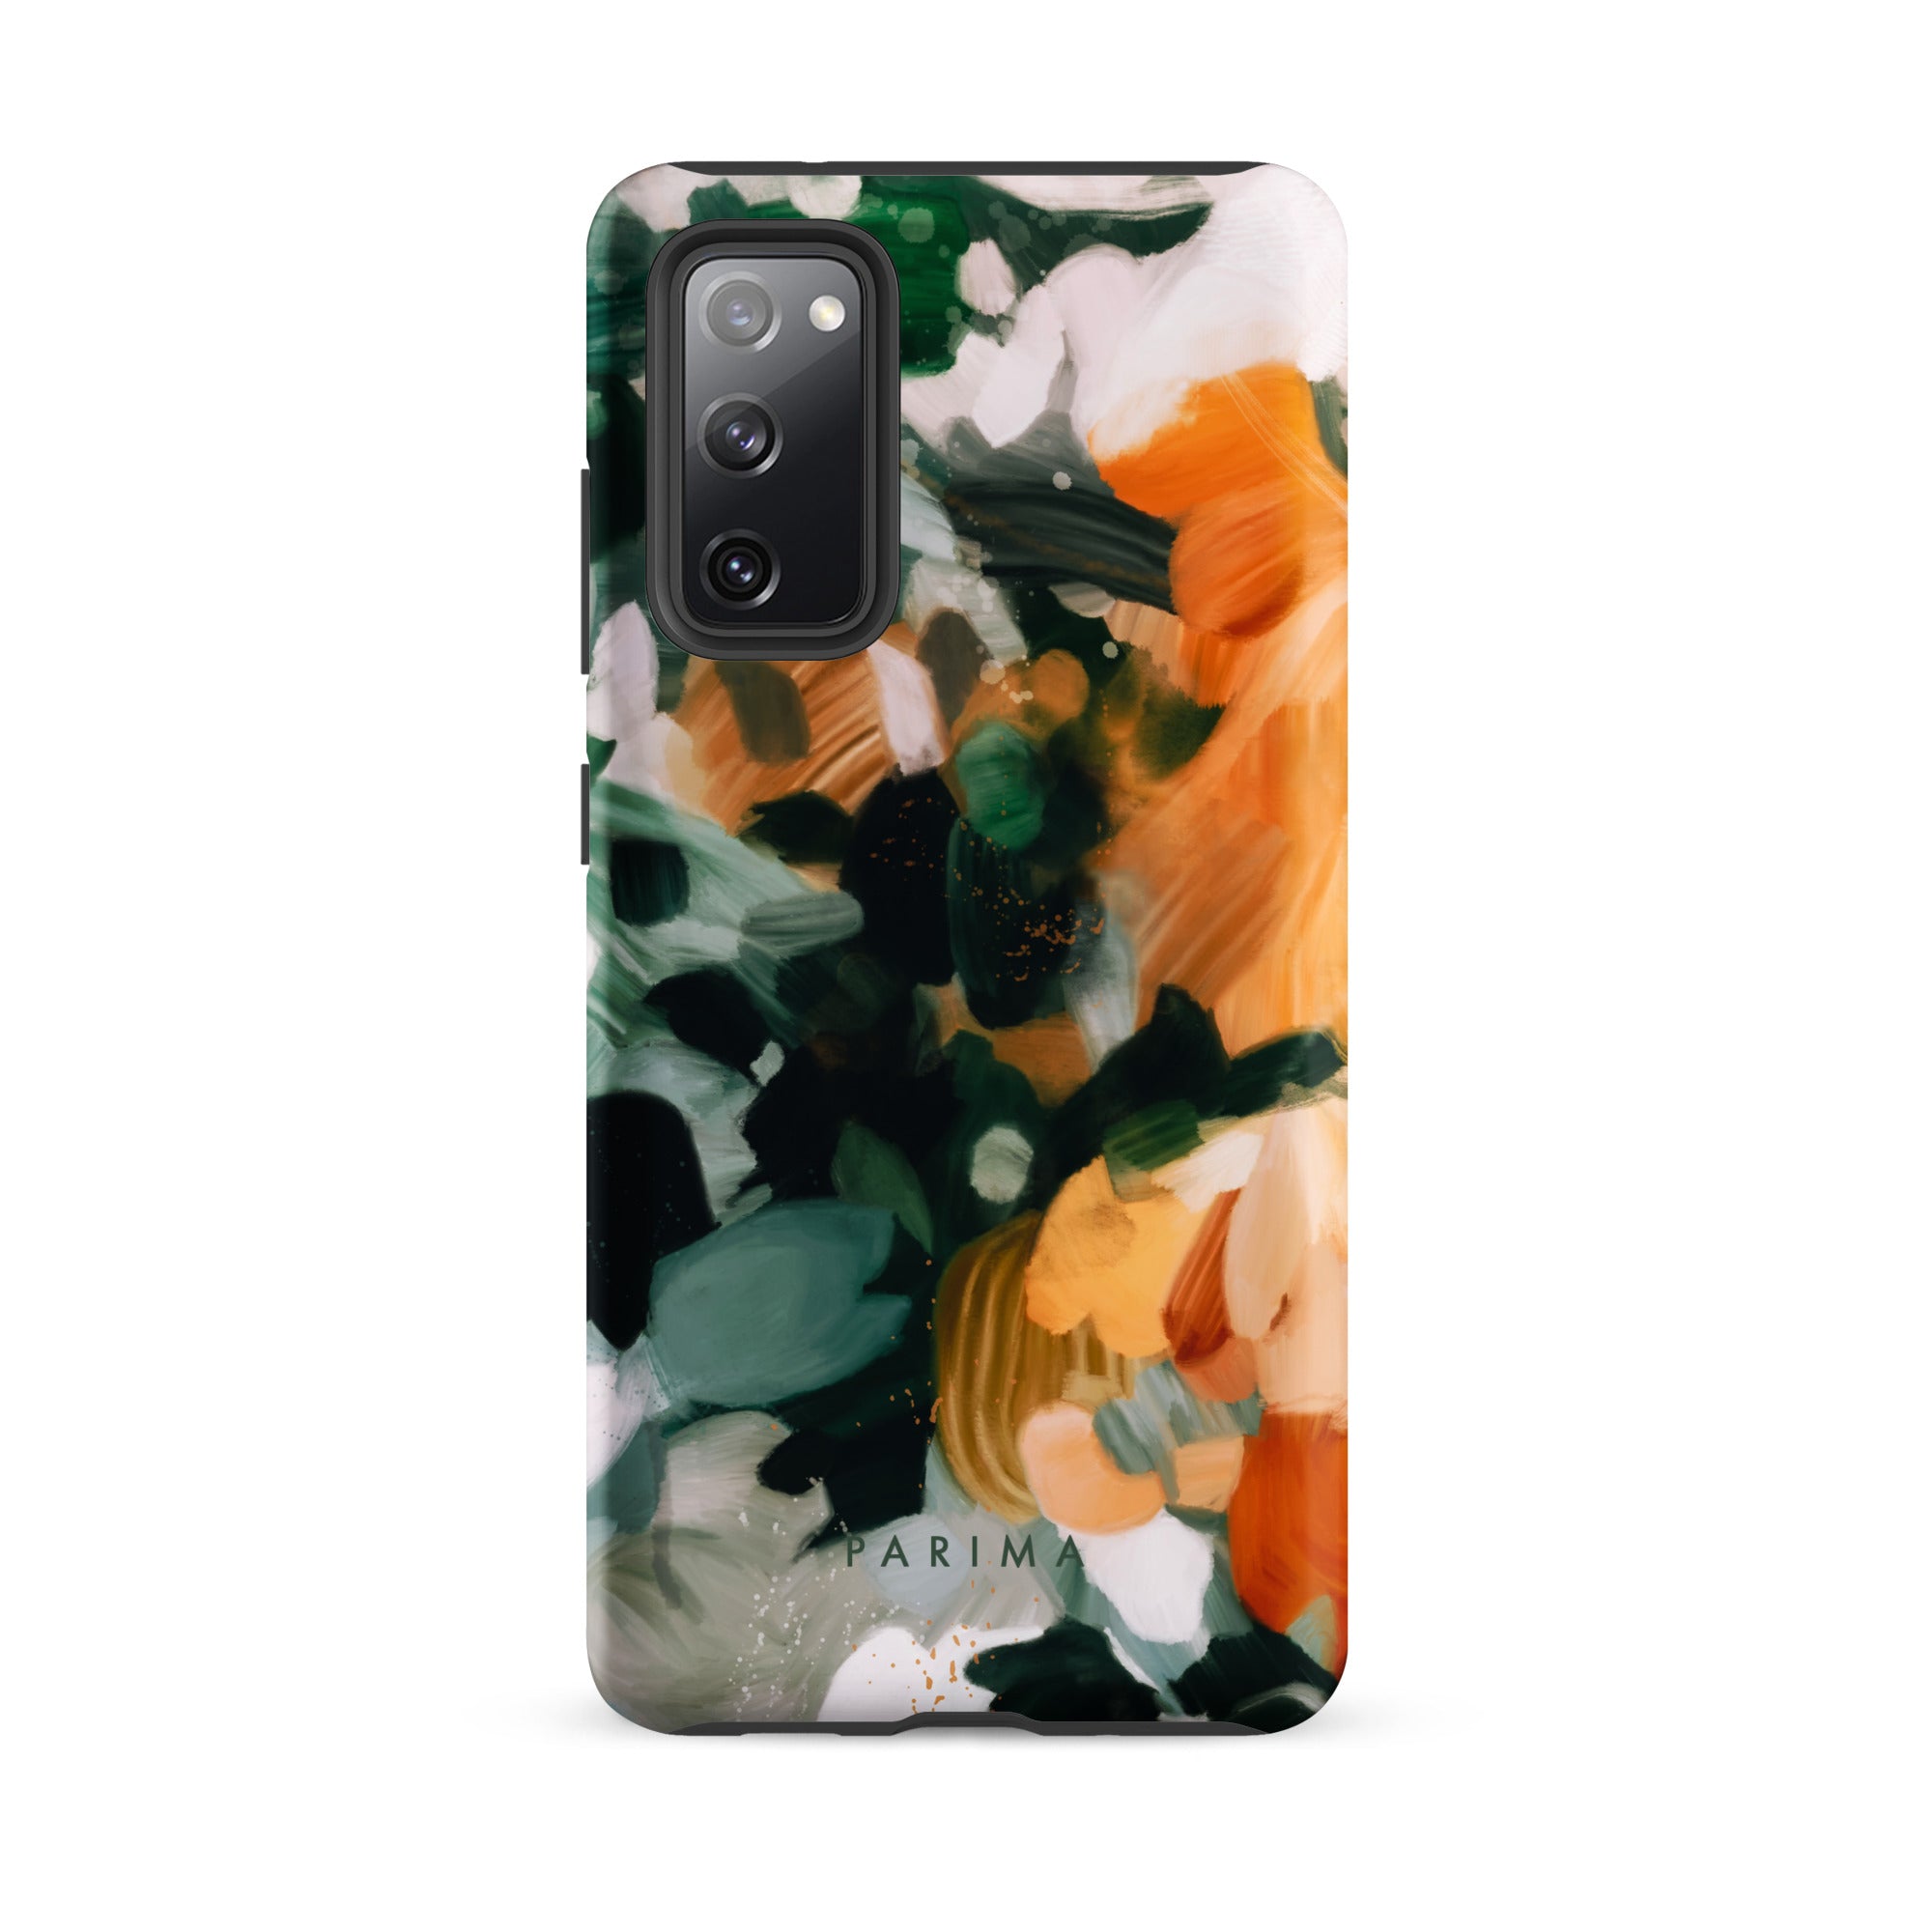 Aspen, green and orange abstract art on Samsung Galaxy S20 FE tough case by Parima Studio